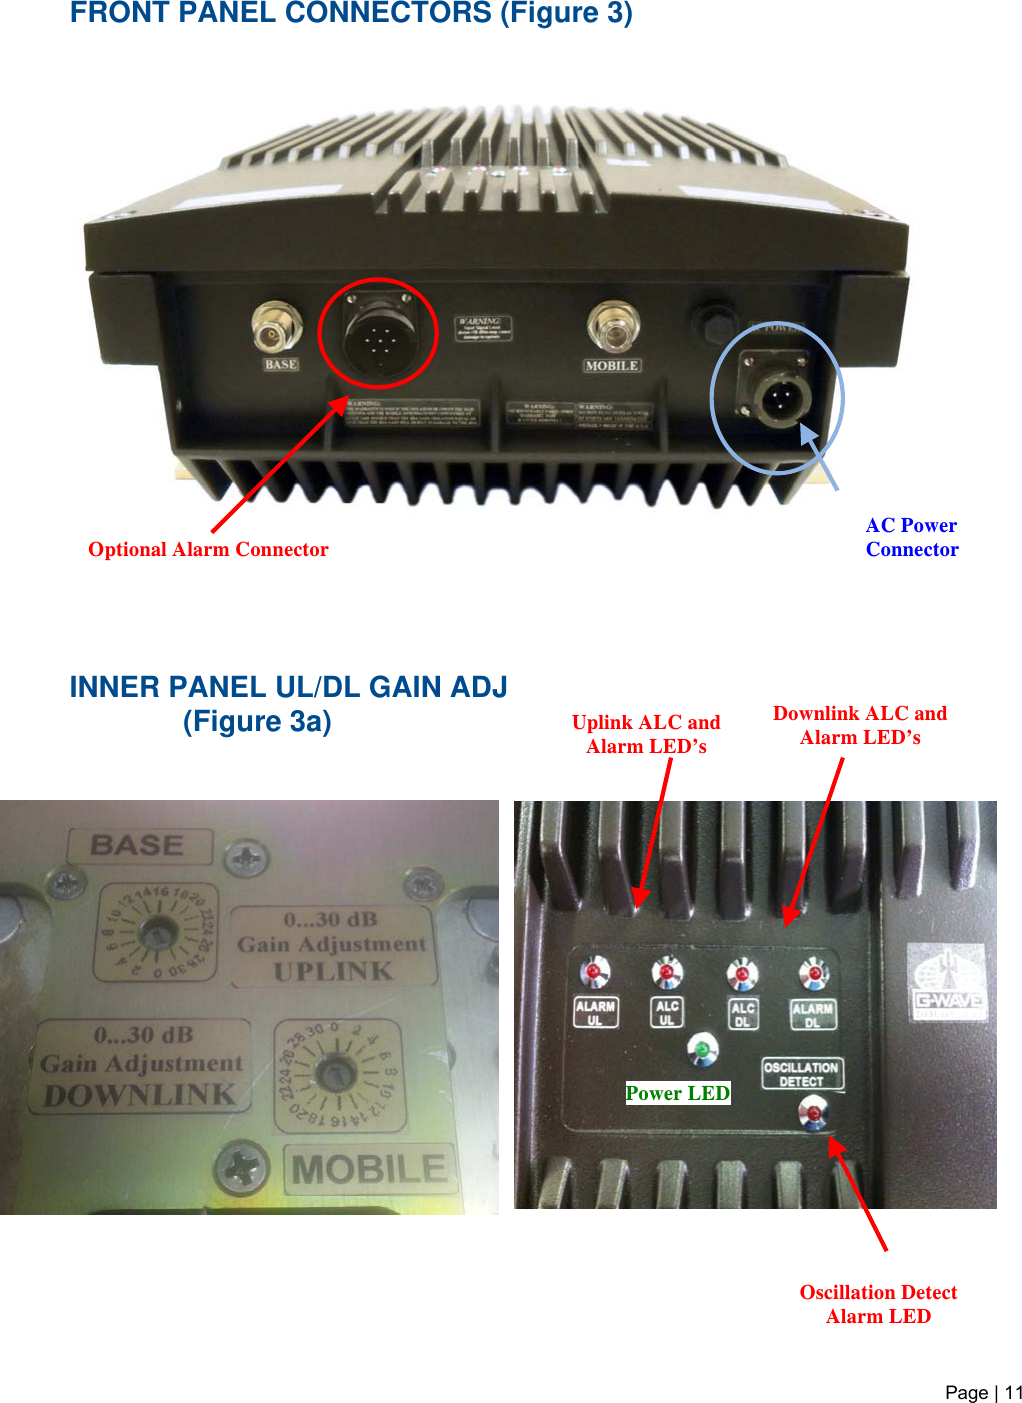 FRONT PANEL CONNECTORS (Figure 3)                                                                                                                                                                AC Power ConnectorOptional Alarm Connector      INNER PANEL UL/DL GAIN ADJ               (Figure 3a)               Downlink ALC and Alarm LED’sUplink ALC and Alarm LED’sPower LEDOscillation Detect Alarm LEDPage | 11   